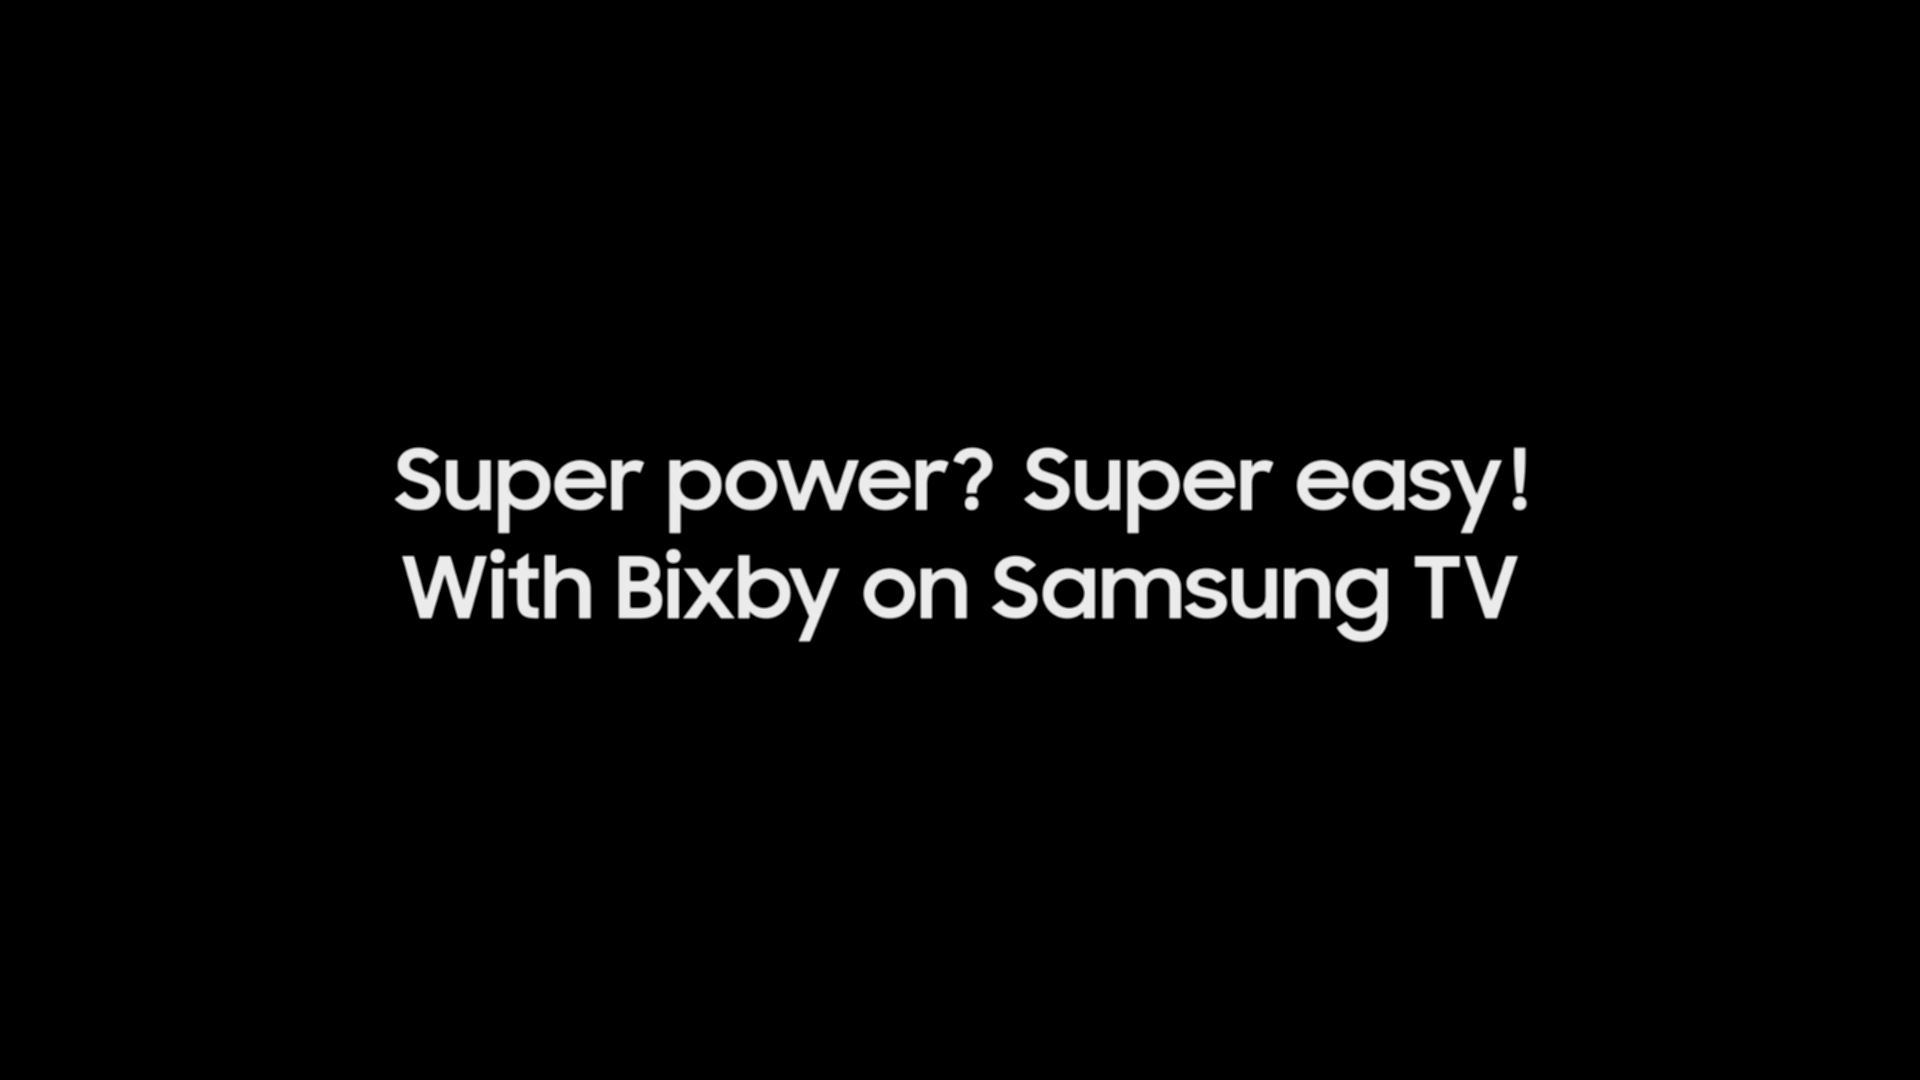 Samsung TV with Bixby